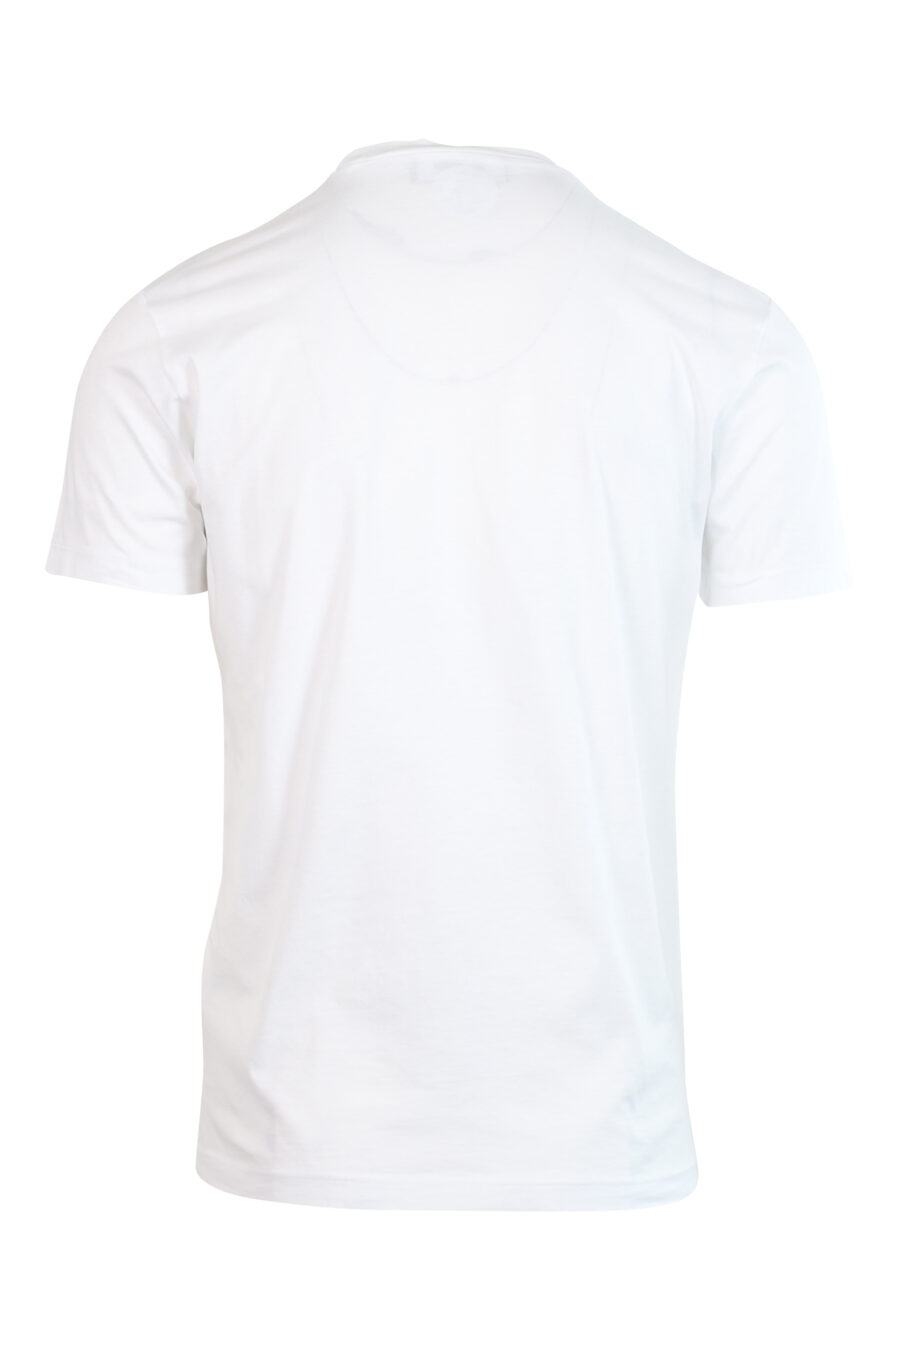 T-shirt blanc avec maxilogo vertical "icon" - 8052134980989 2